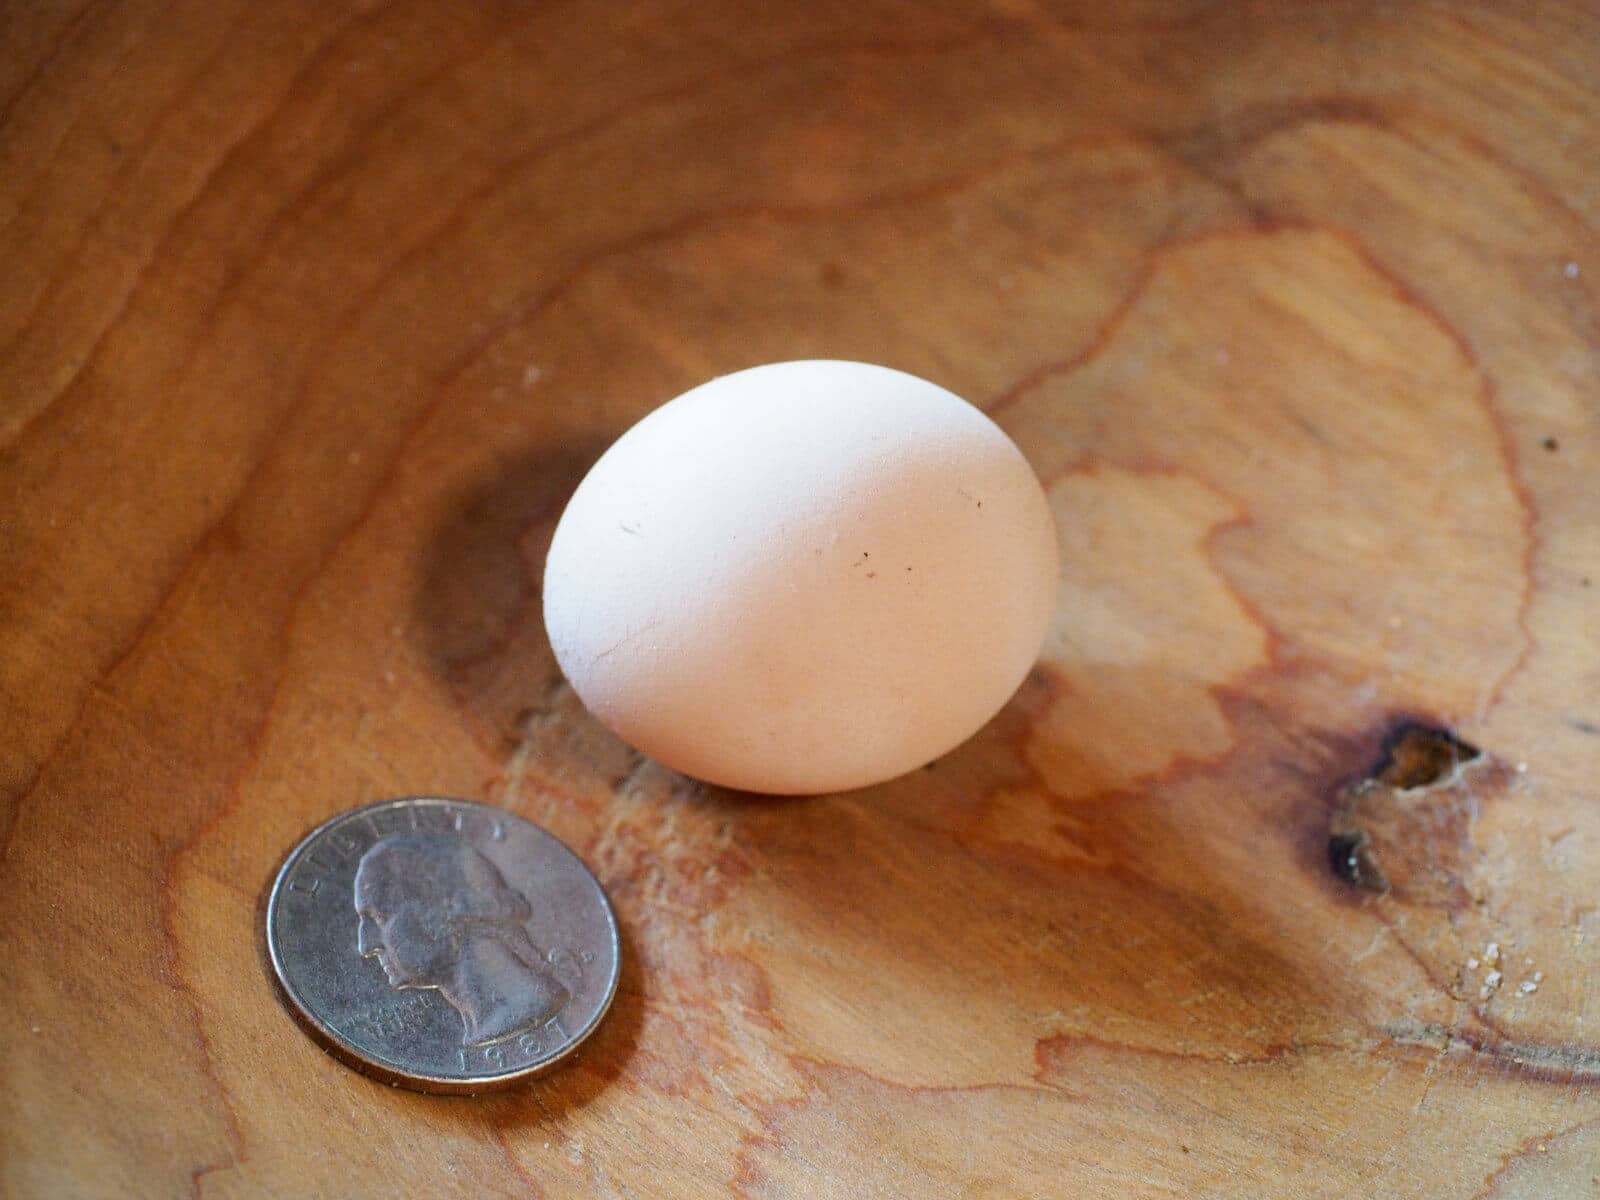 Fart eggs are smaller than standard chicken eggs